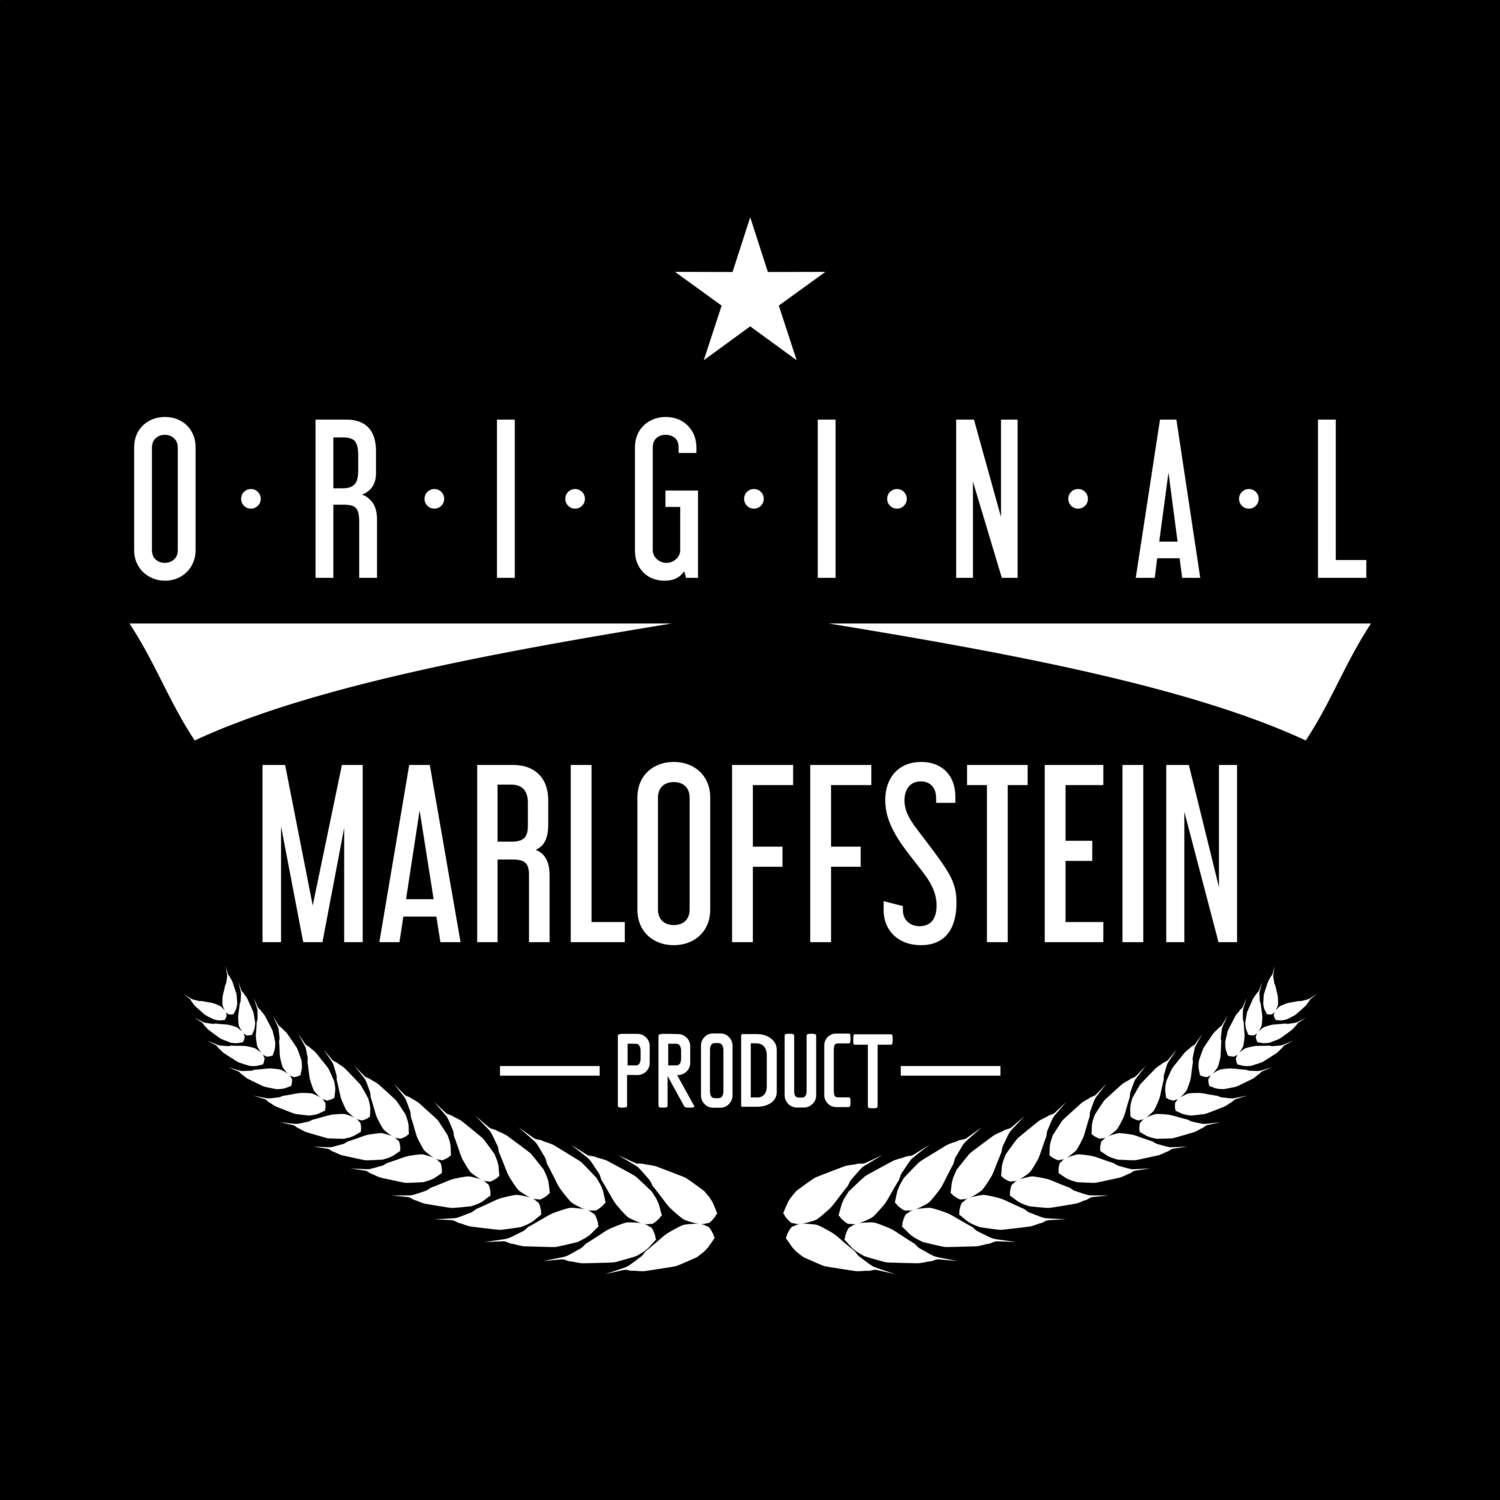 Marloffstein T-Shirt »Original Product«